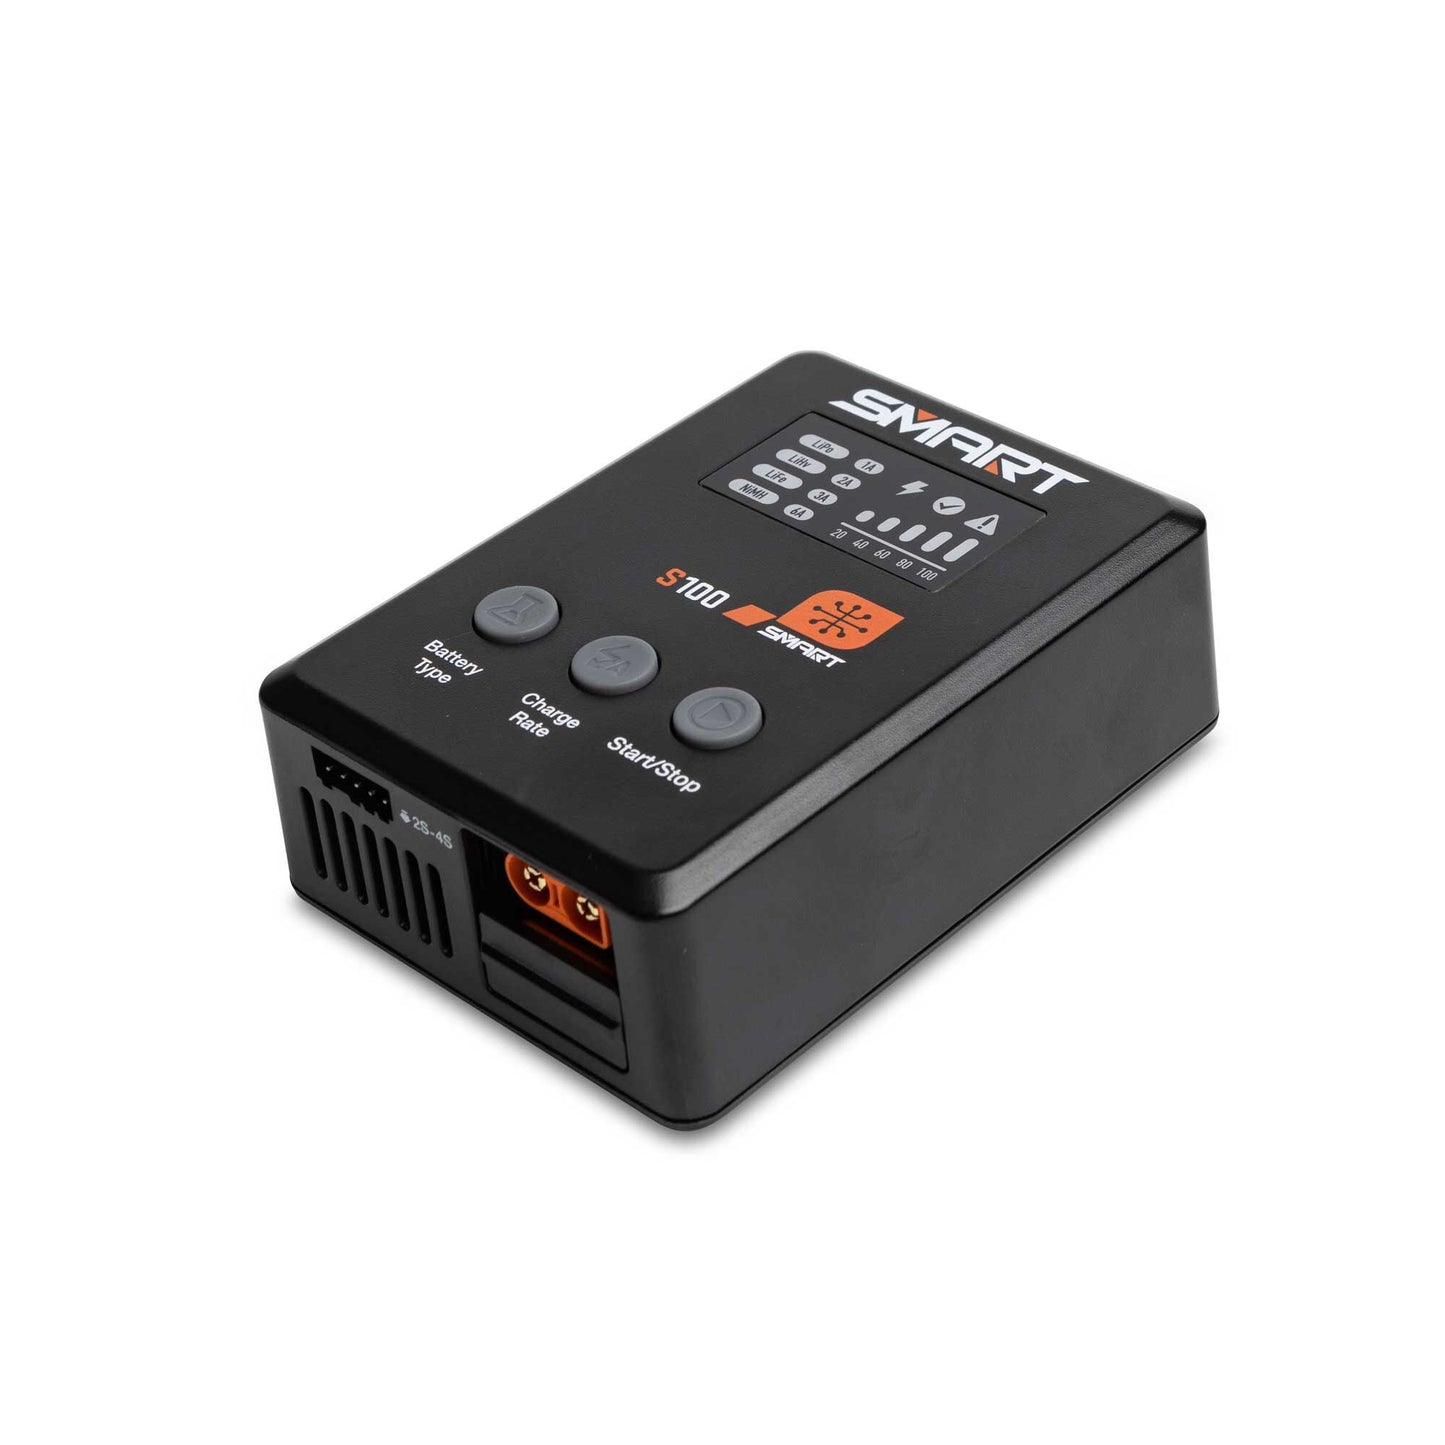 Spektrum SPMXC2090 Smart S100 G2 USB-C Charger